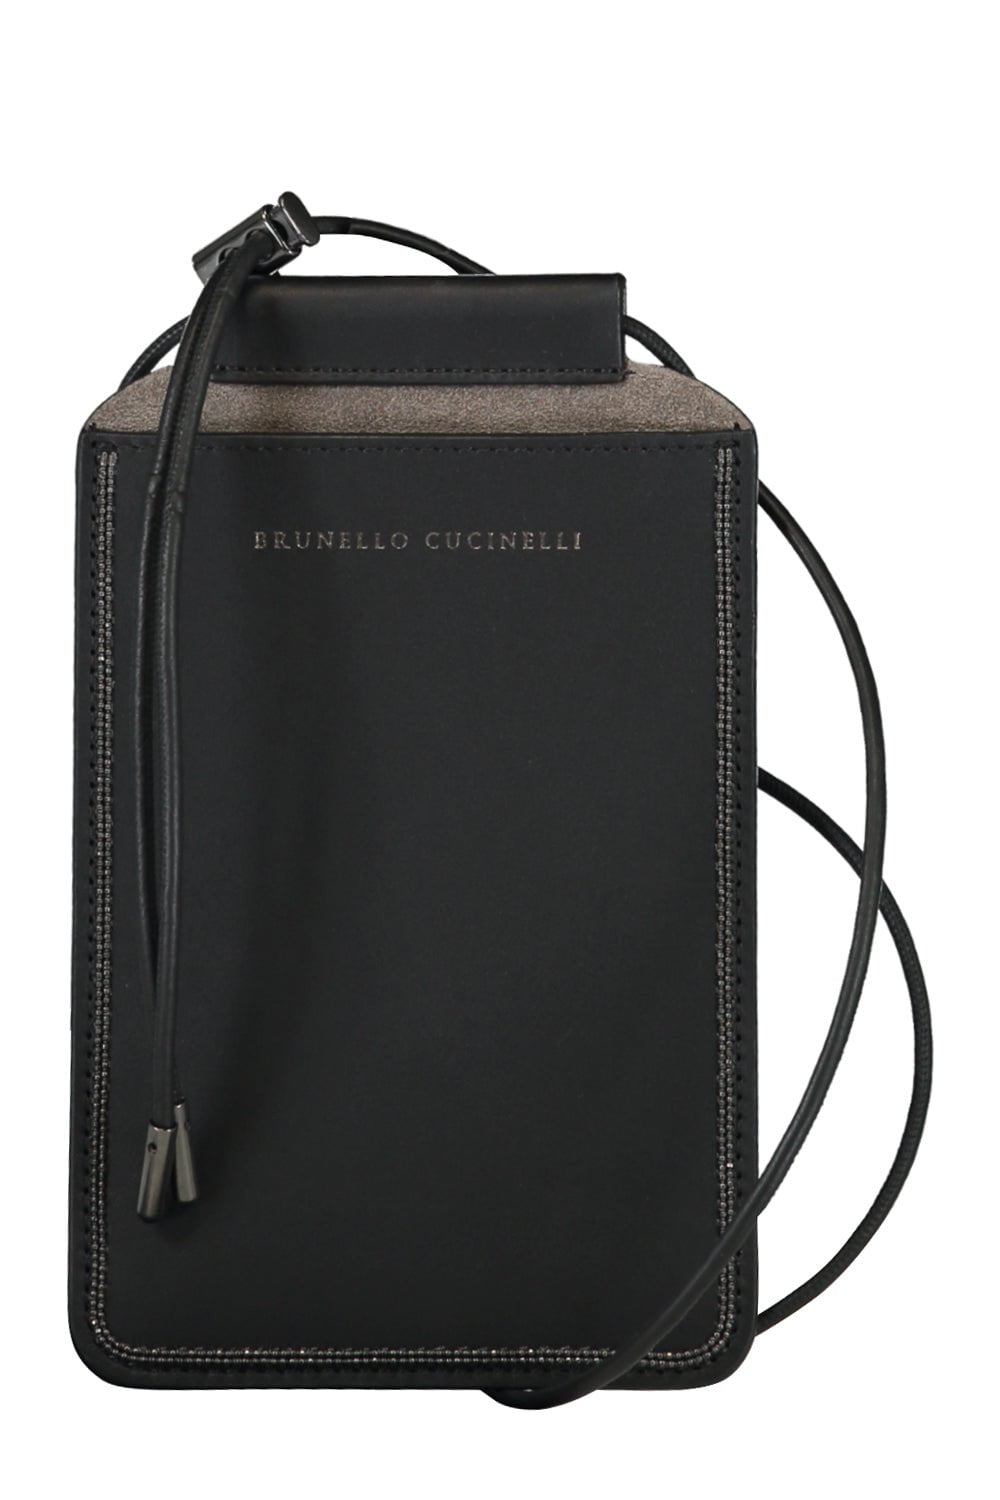 Beaded Trim Leather Phone Bag HANDBAGSHOULDER BRUNELLO CUCINELLI   